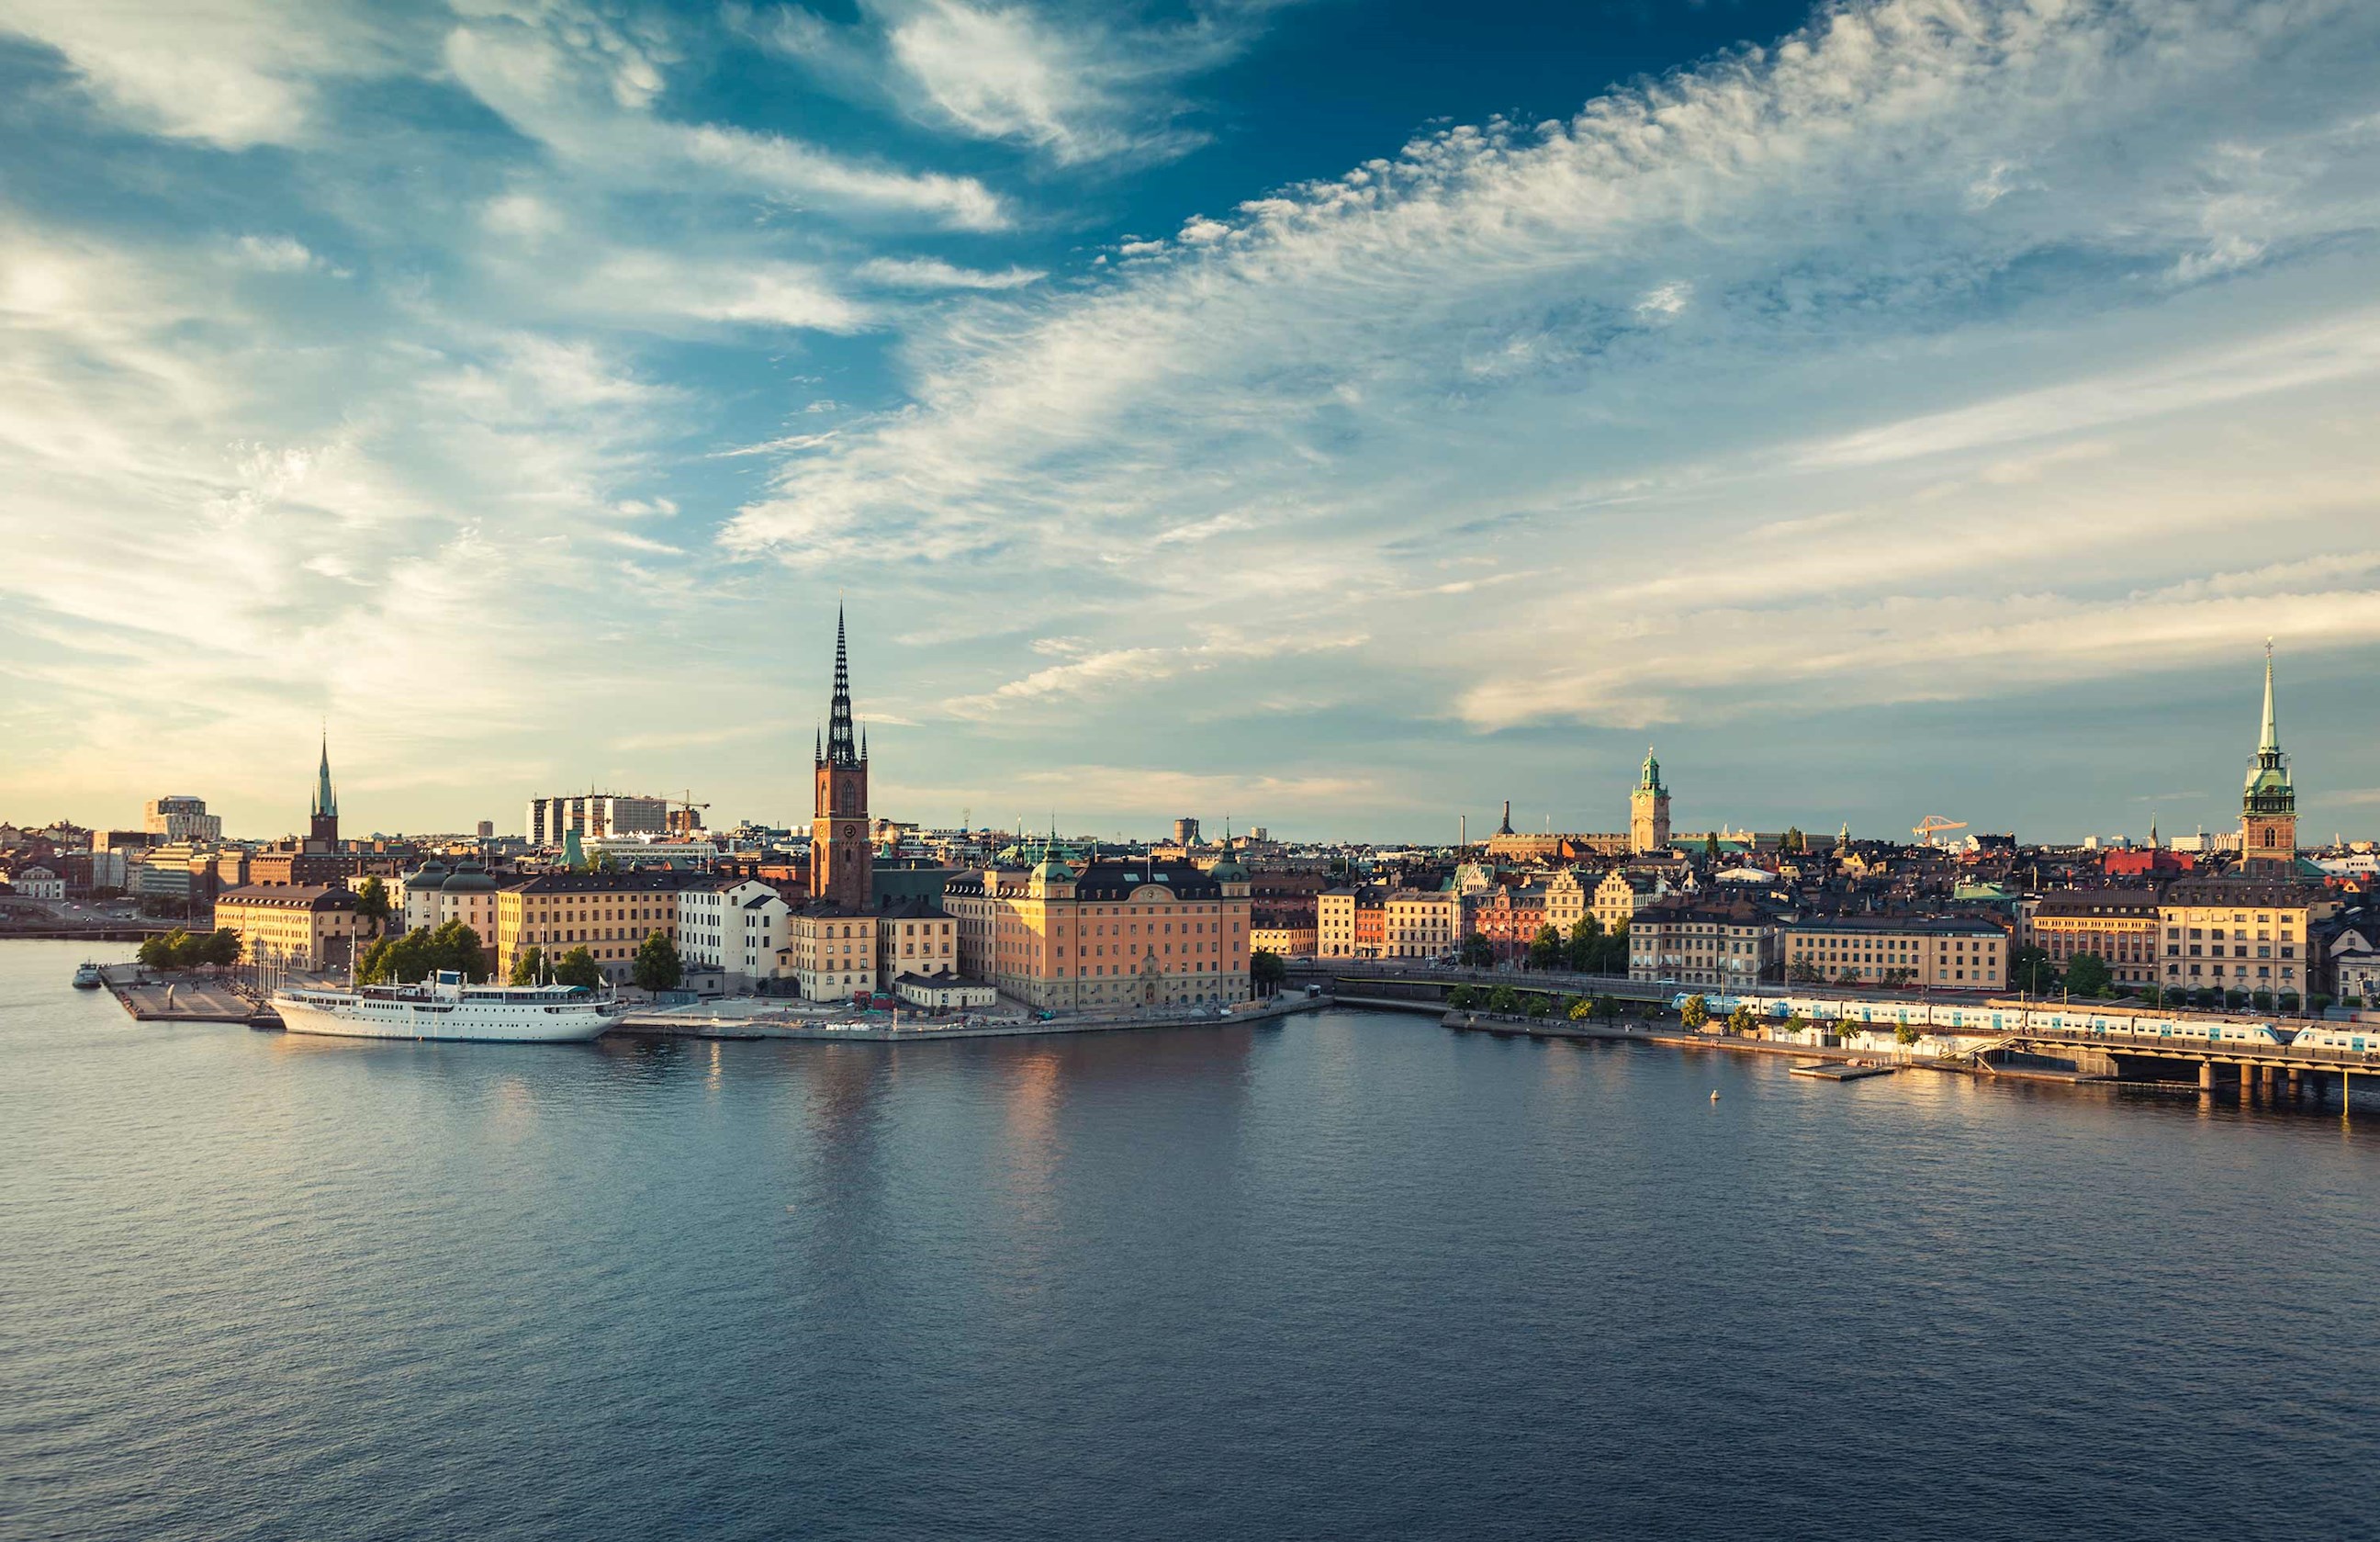 Cruise on Lake Malaren in Stockholm, Sweden